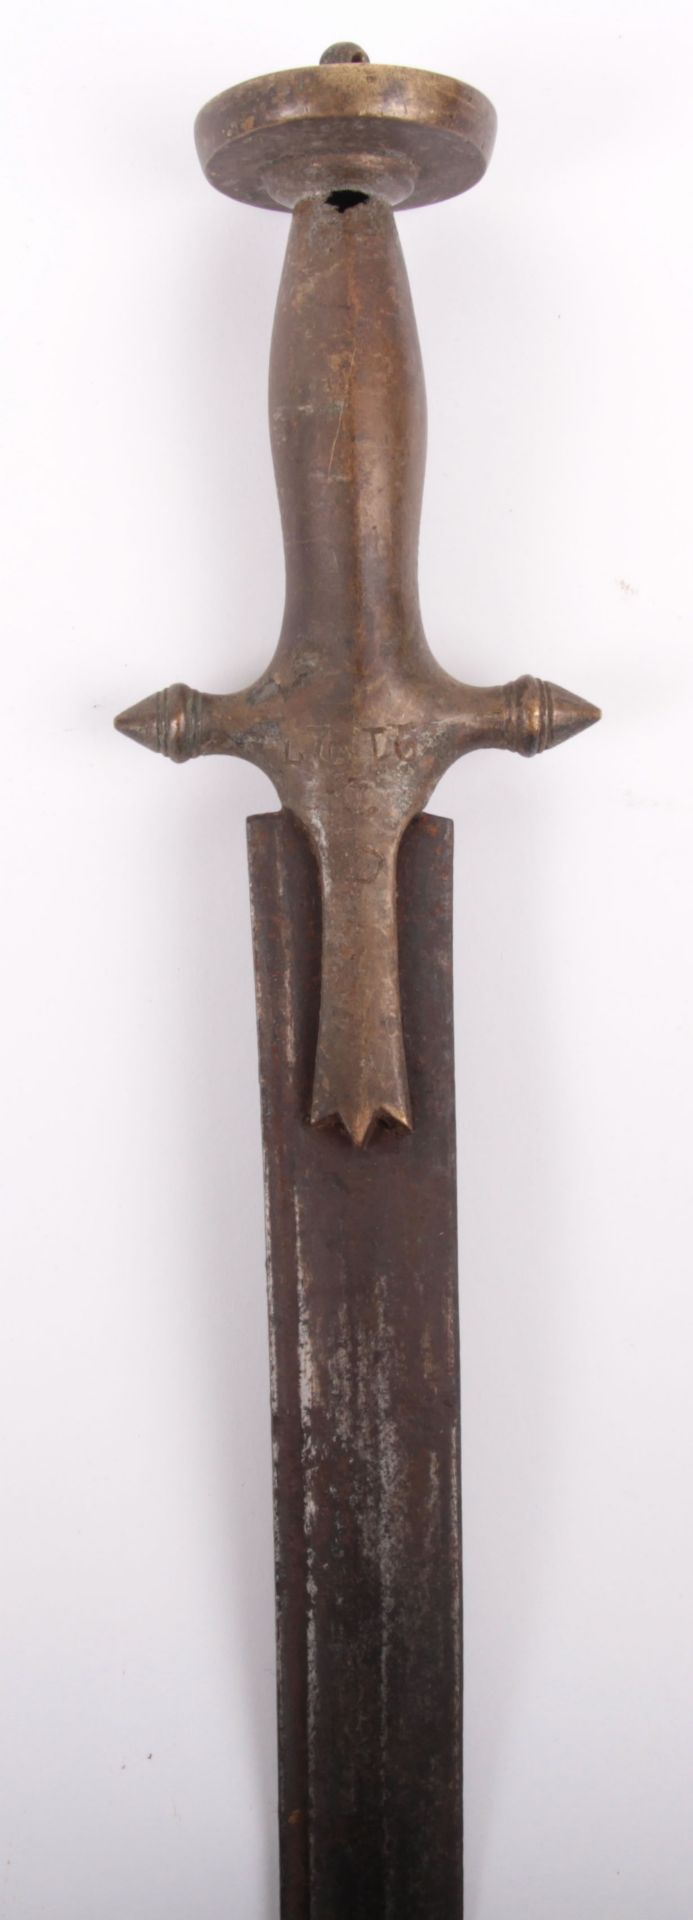 Unusual 17th / 18th Century Indian Sword Tulwar - Image 2 of 8